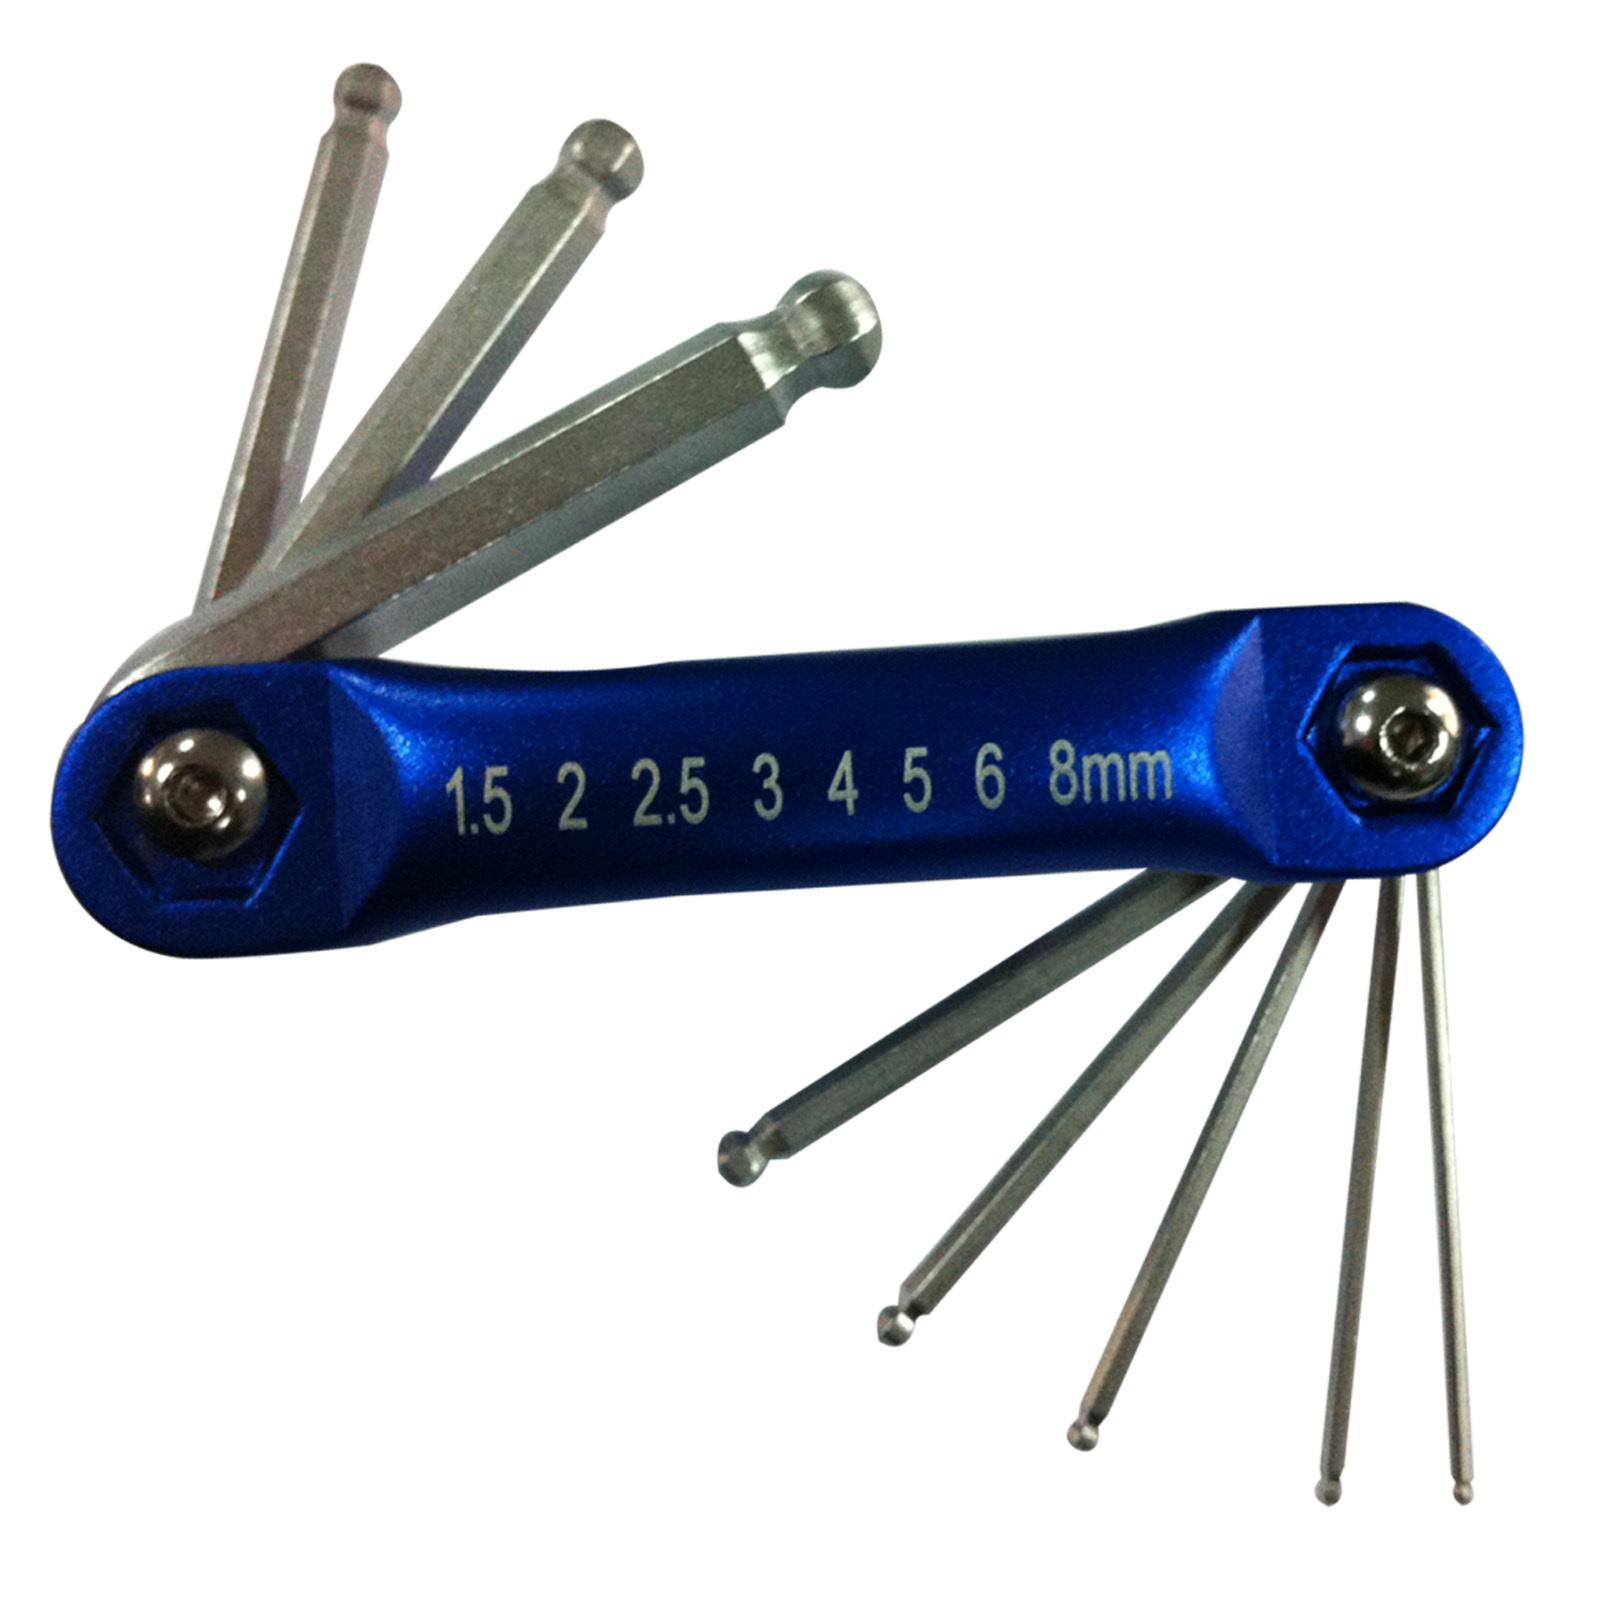 Sada IMBUS klíčů s kuličkou 1,5-8 mm 8 dílů